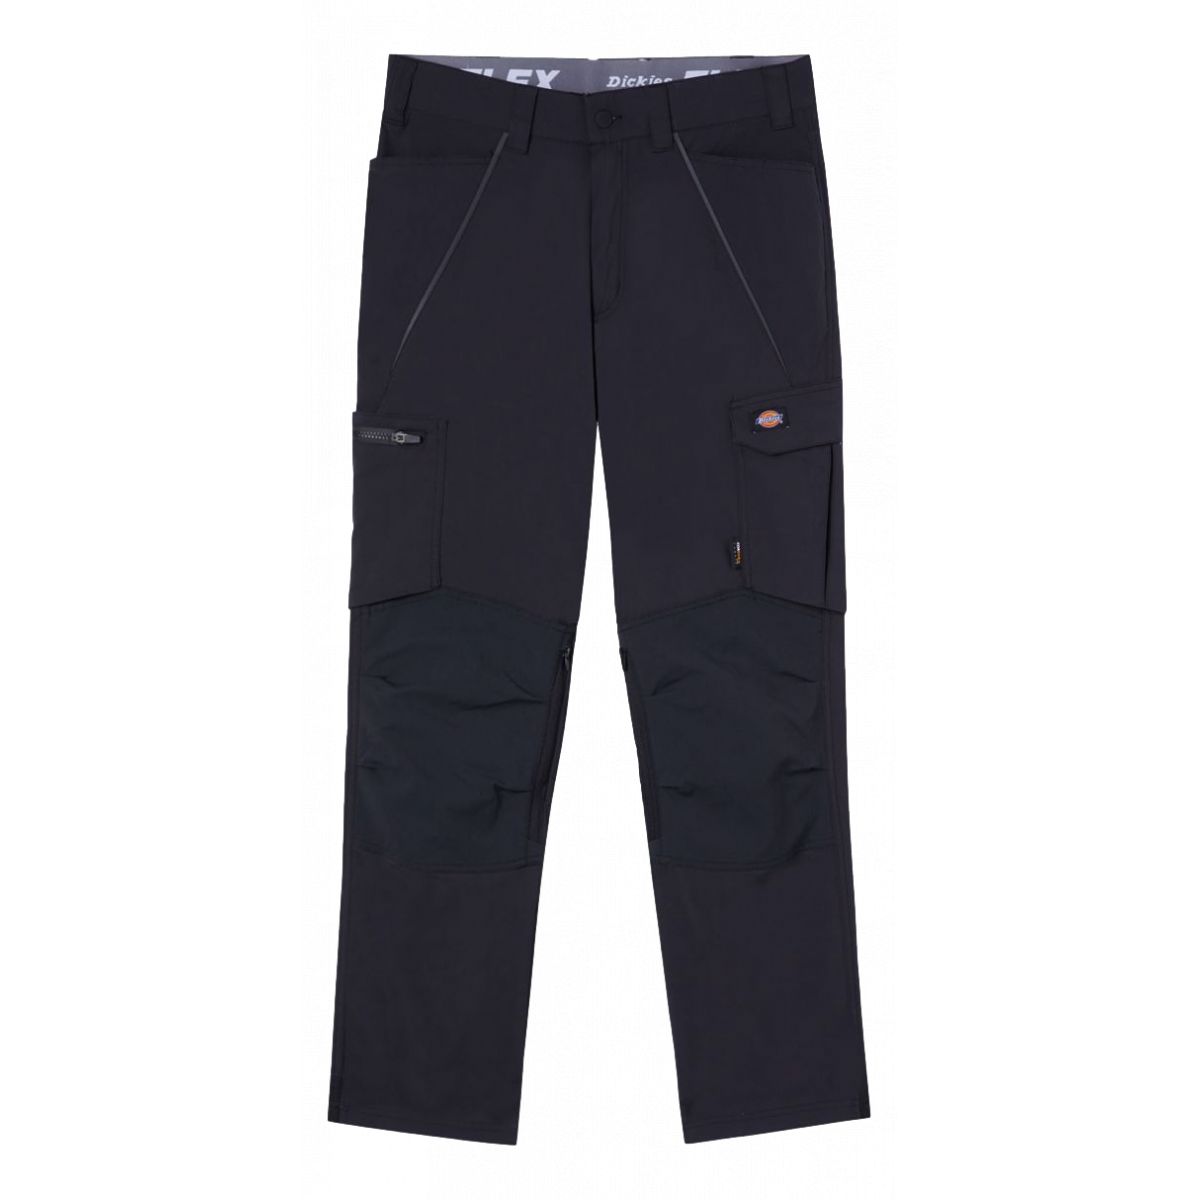 Pantalon léger Flex Noir - Dickies - Taille 40 0